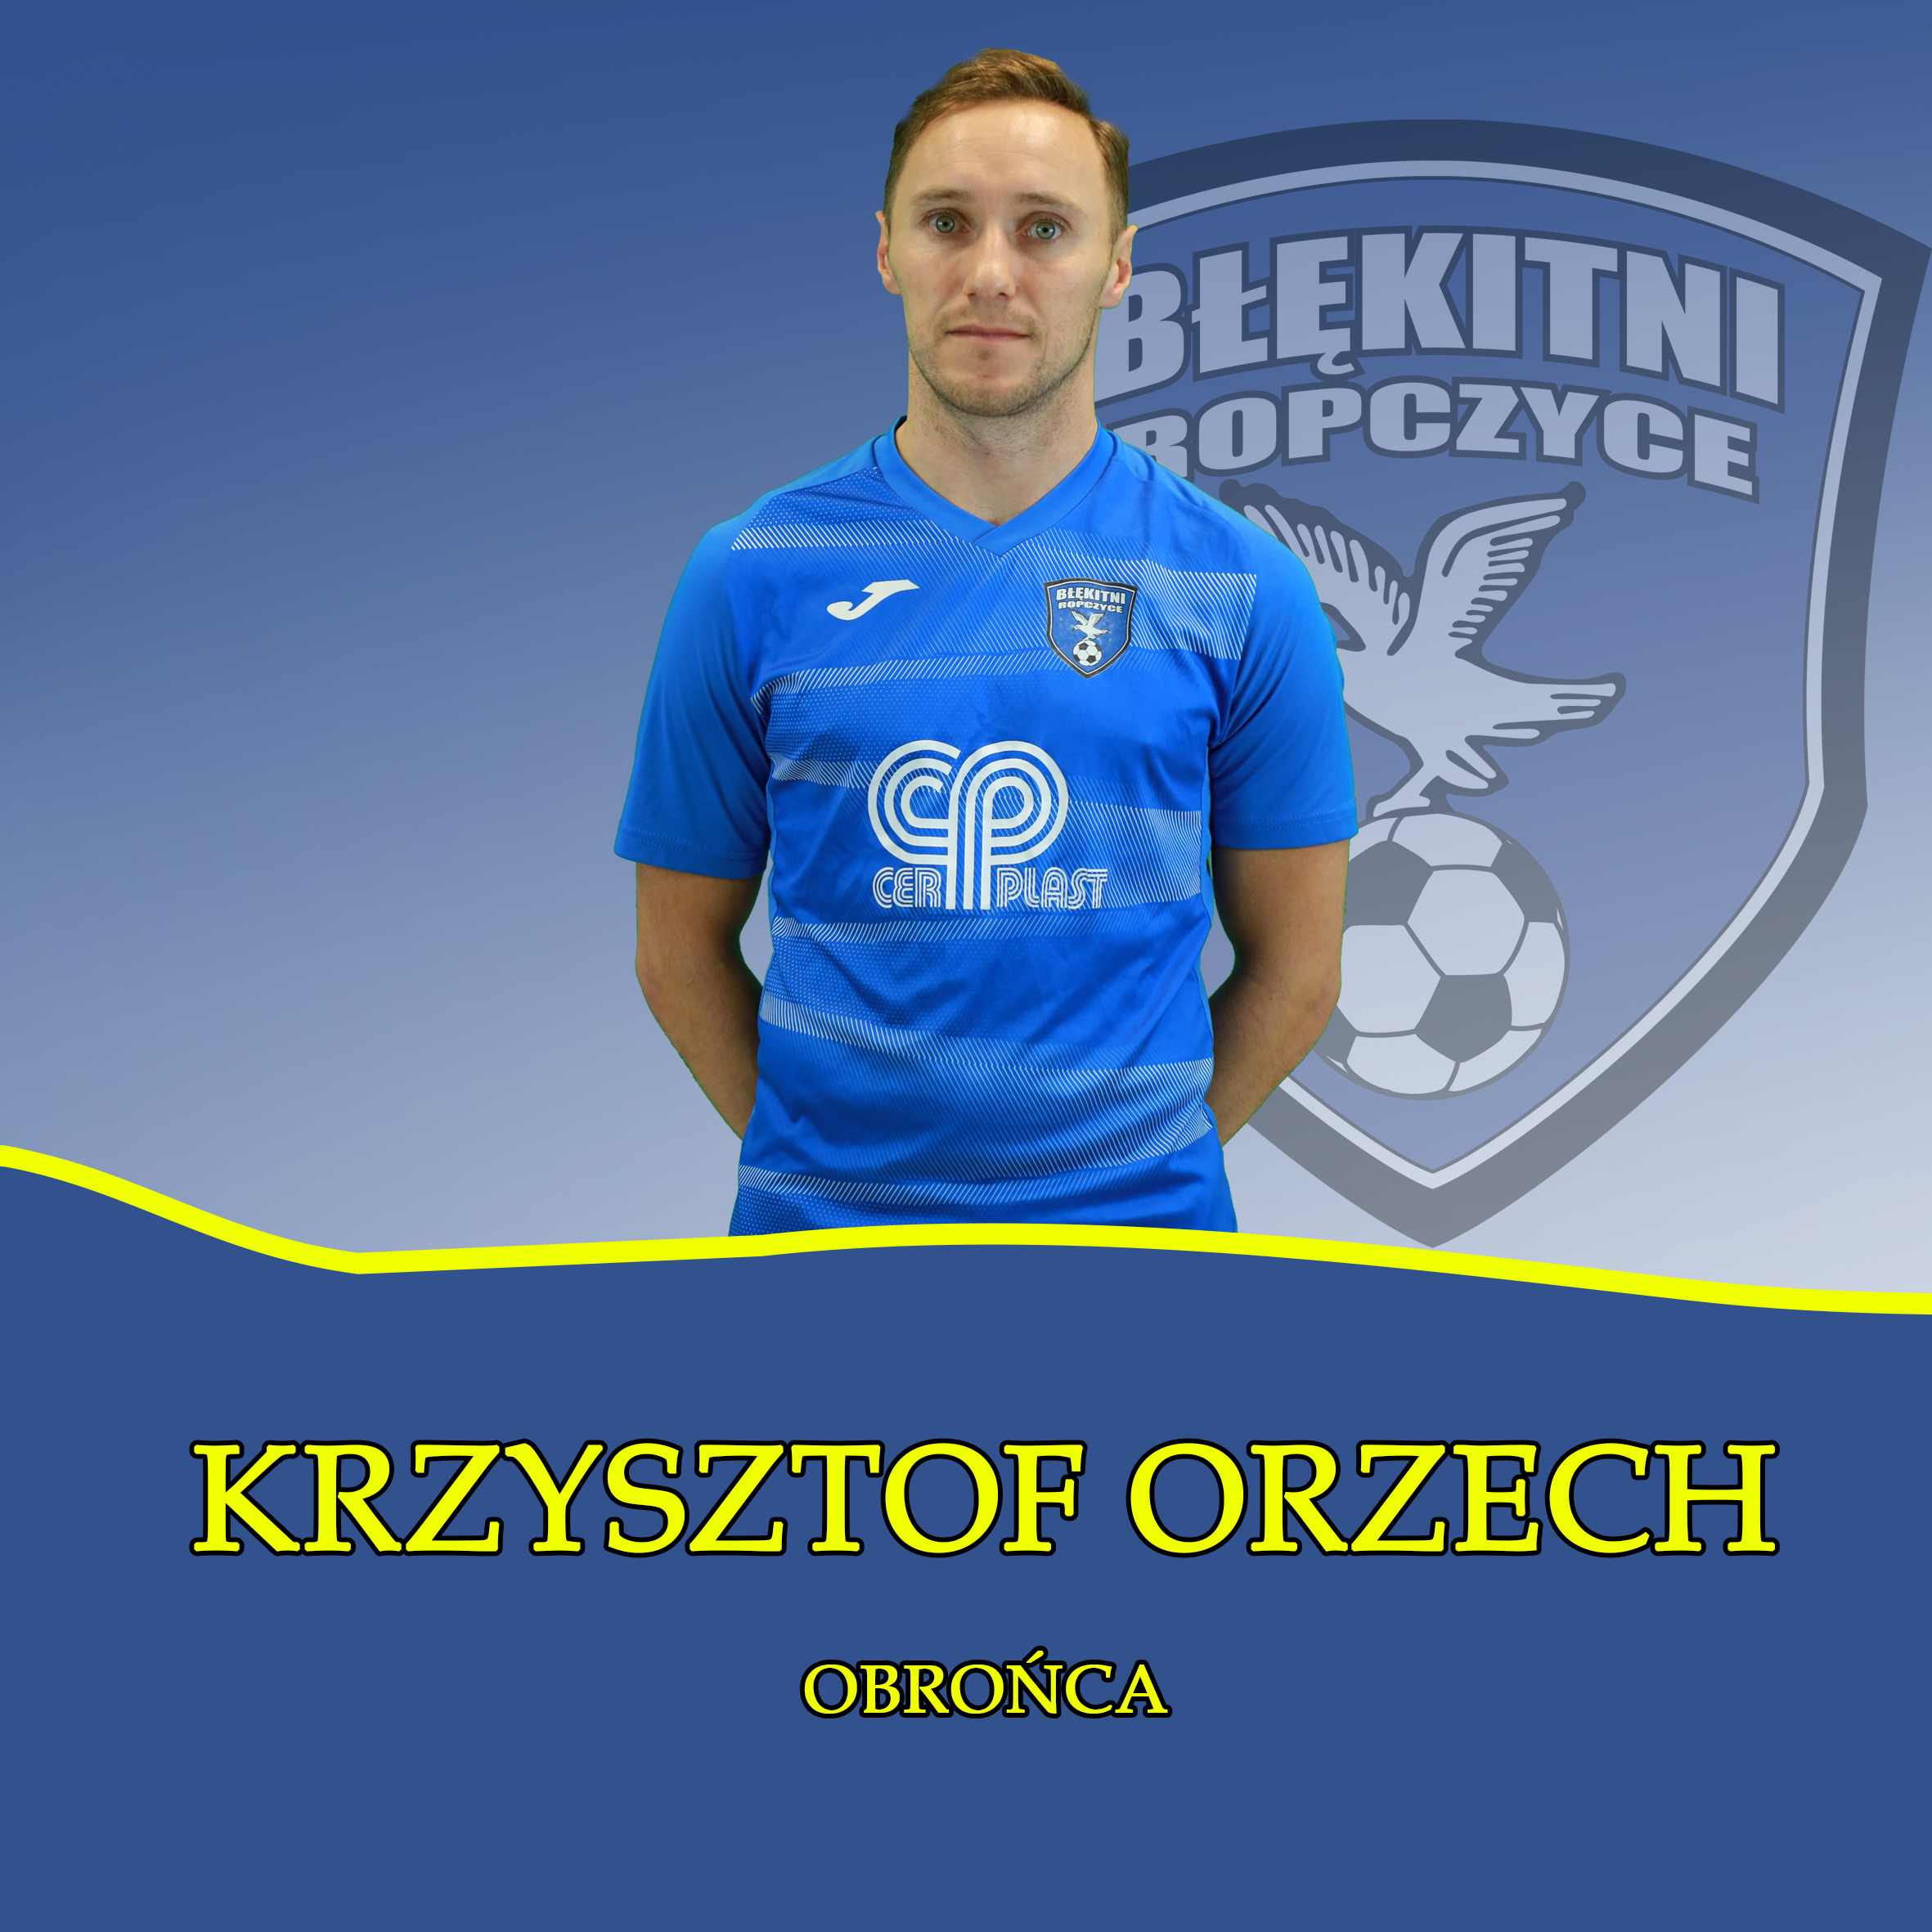 Krzysztof Orzech